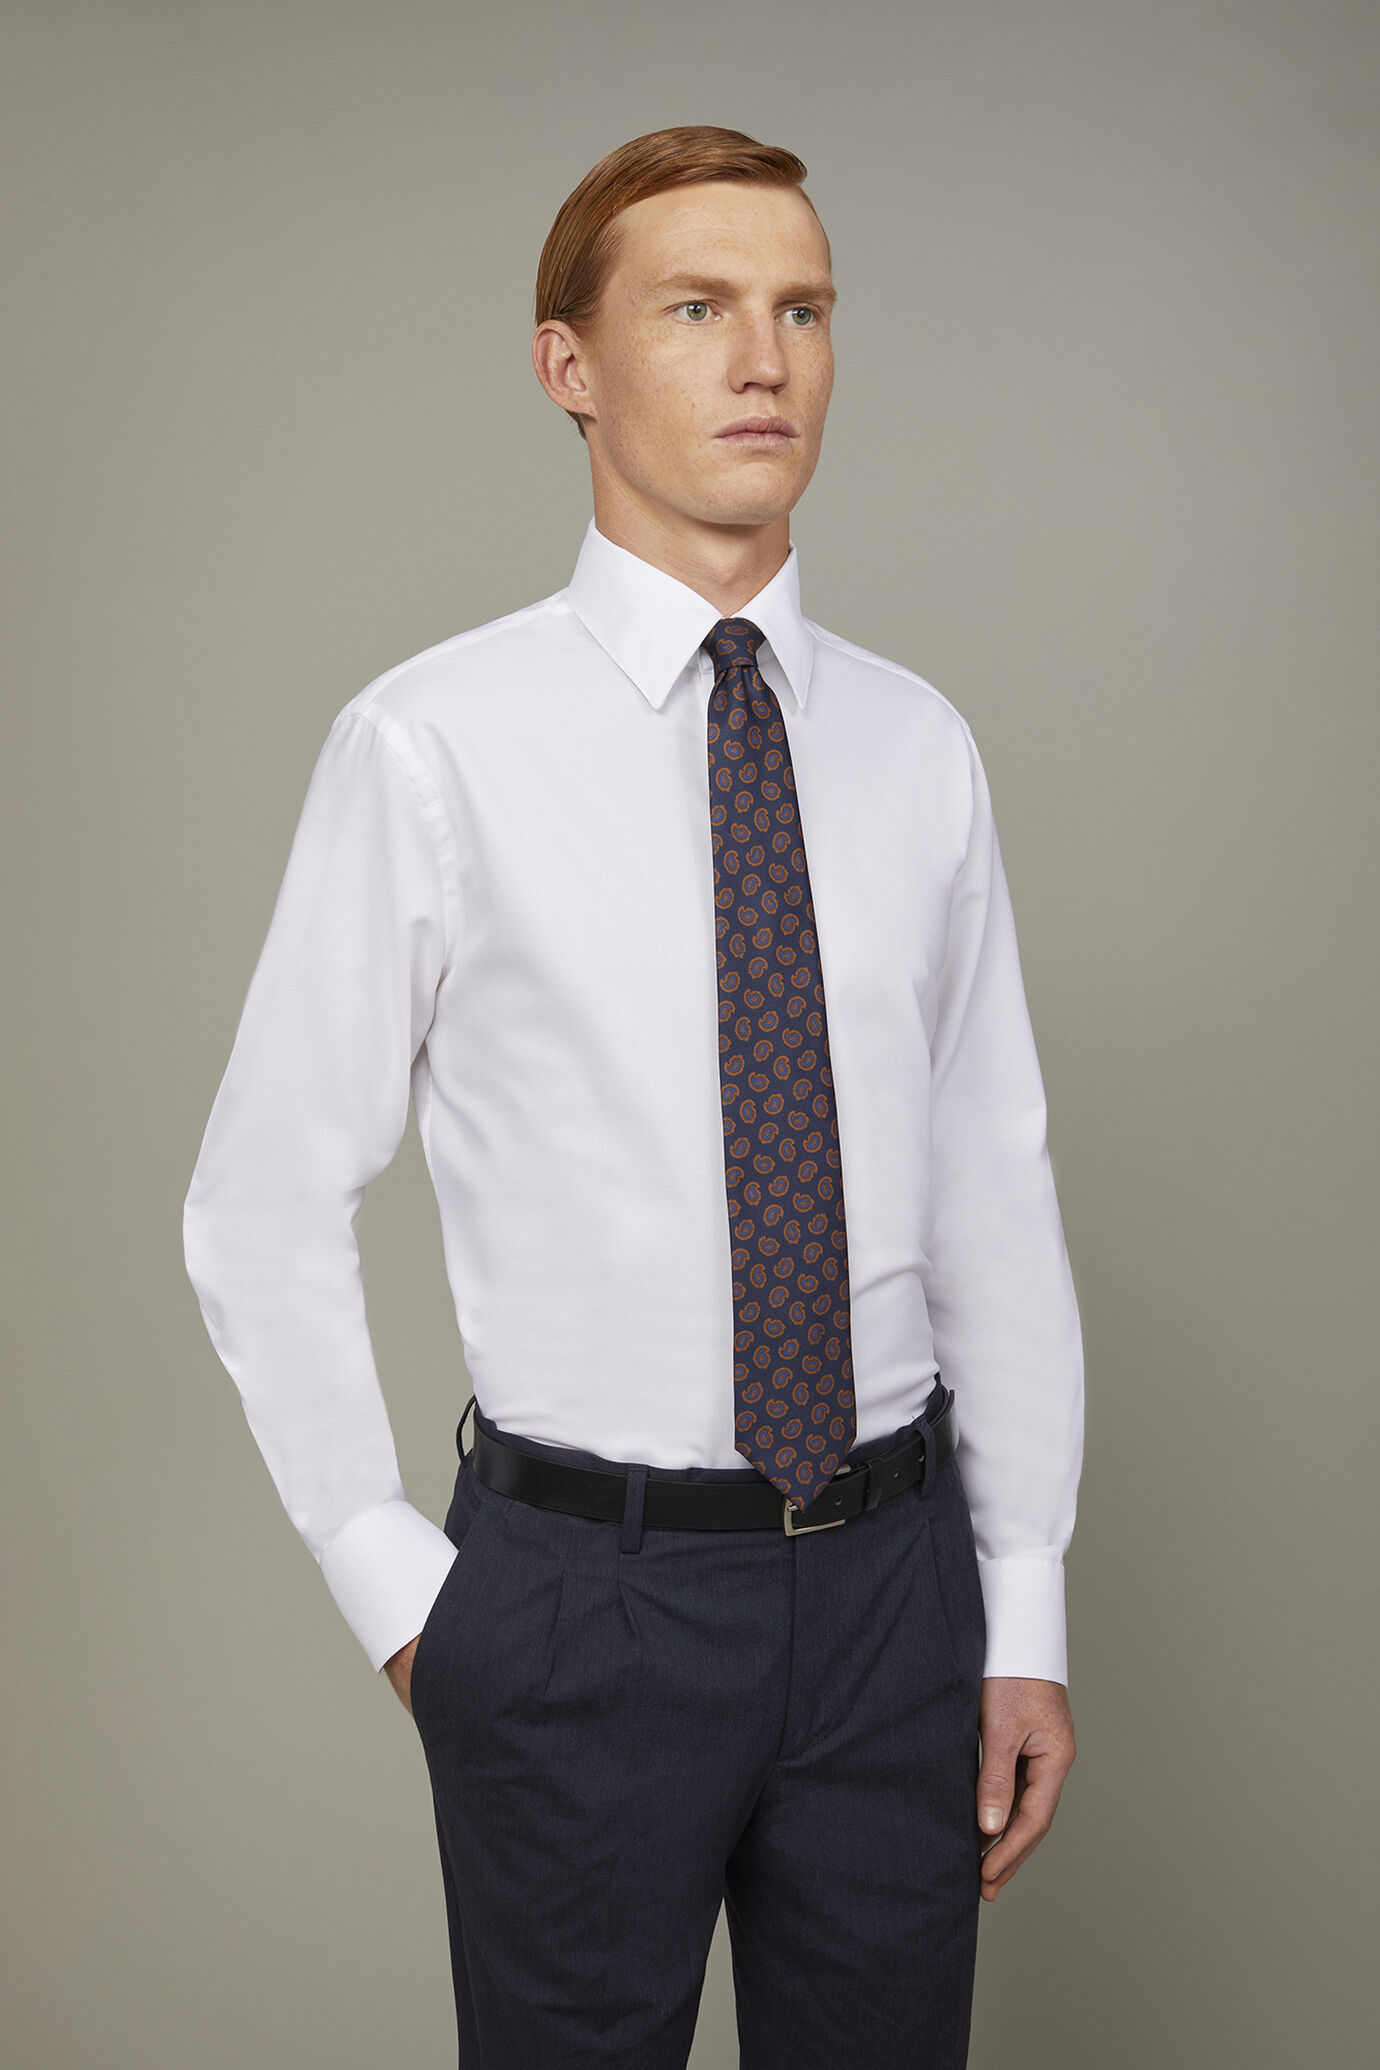 Men's shirt classic collar 100% cotton pinpoint fabric plain regualr fit image number 2